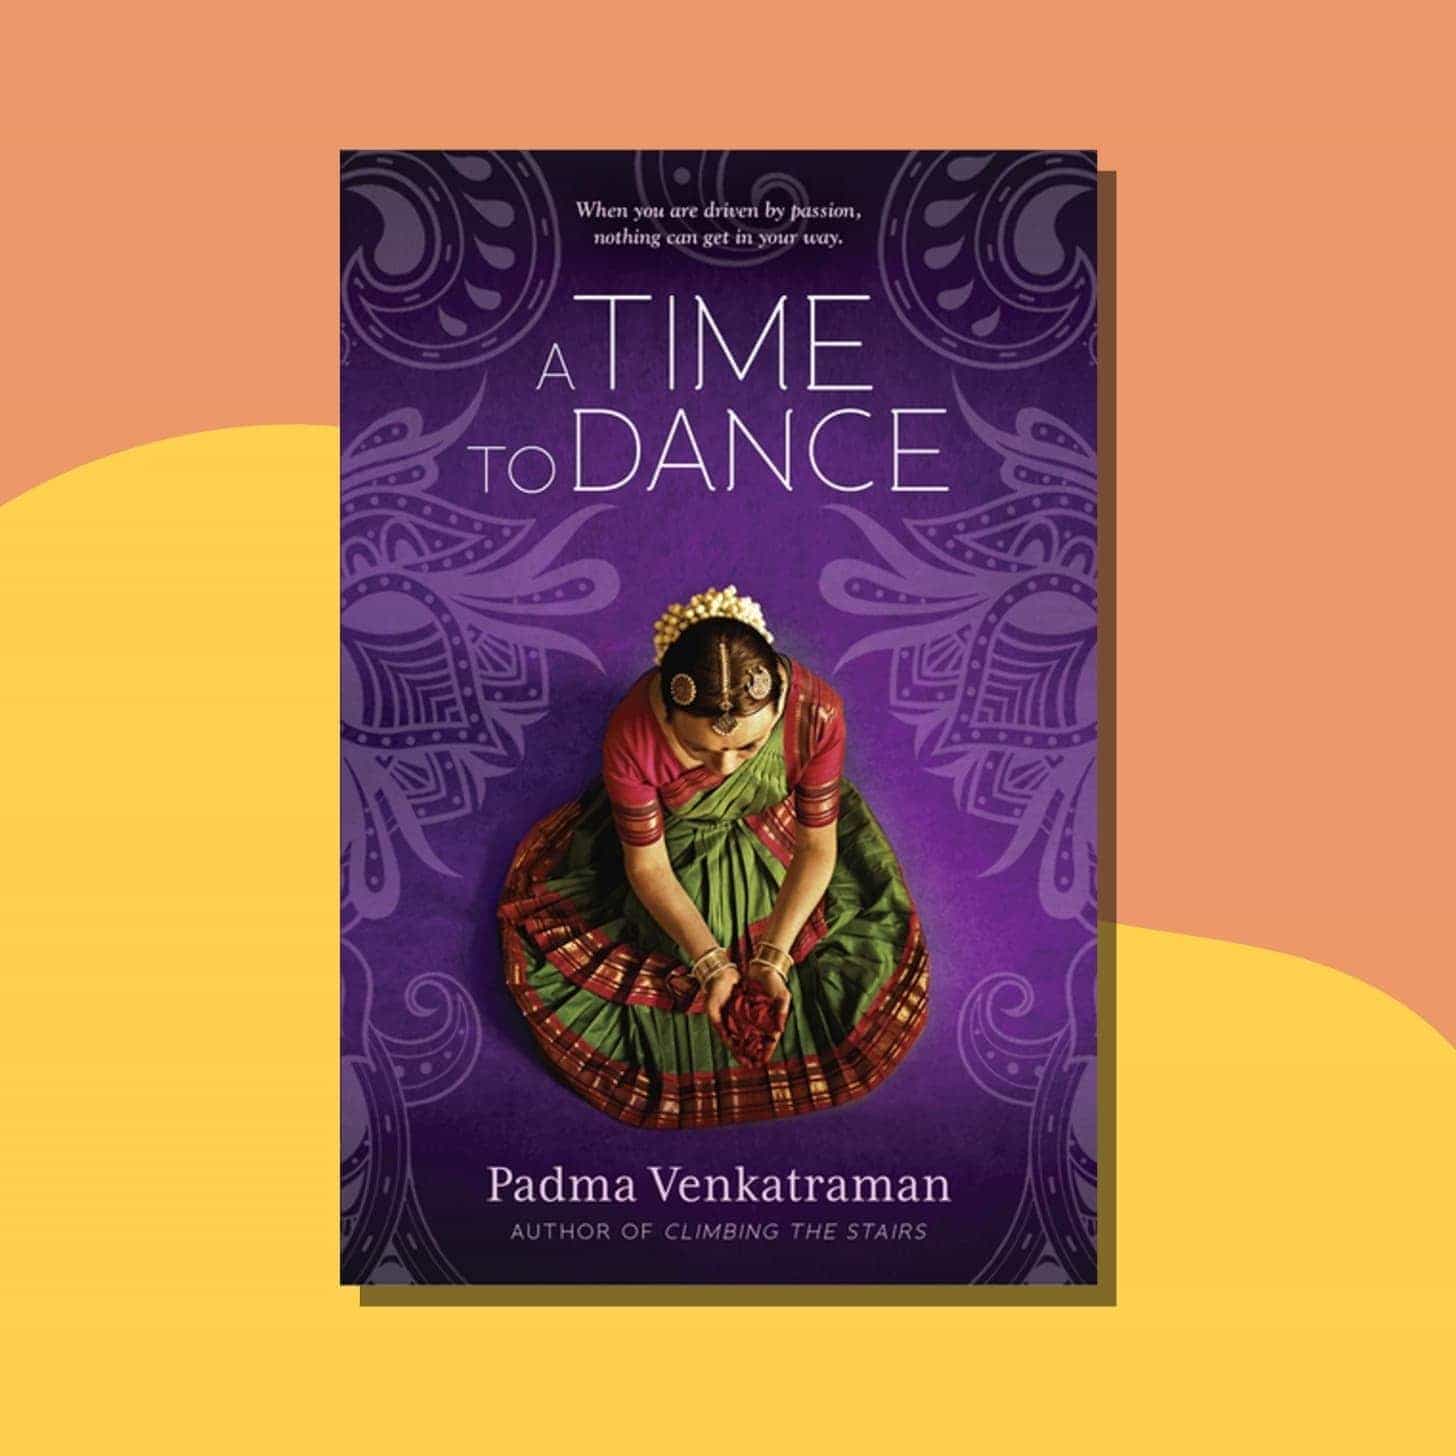 “A Time to Dance” by Padma Venkatrama